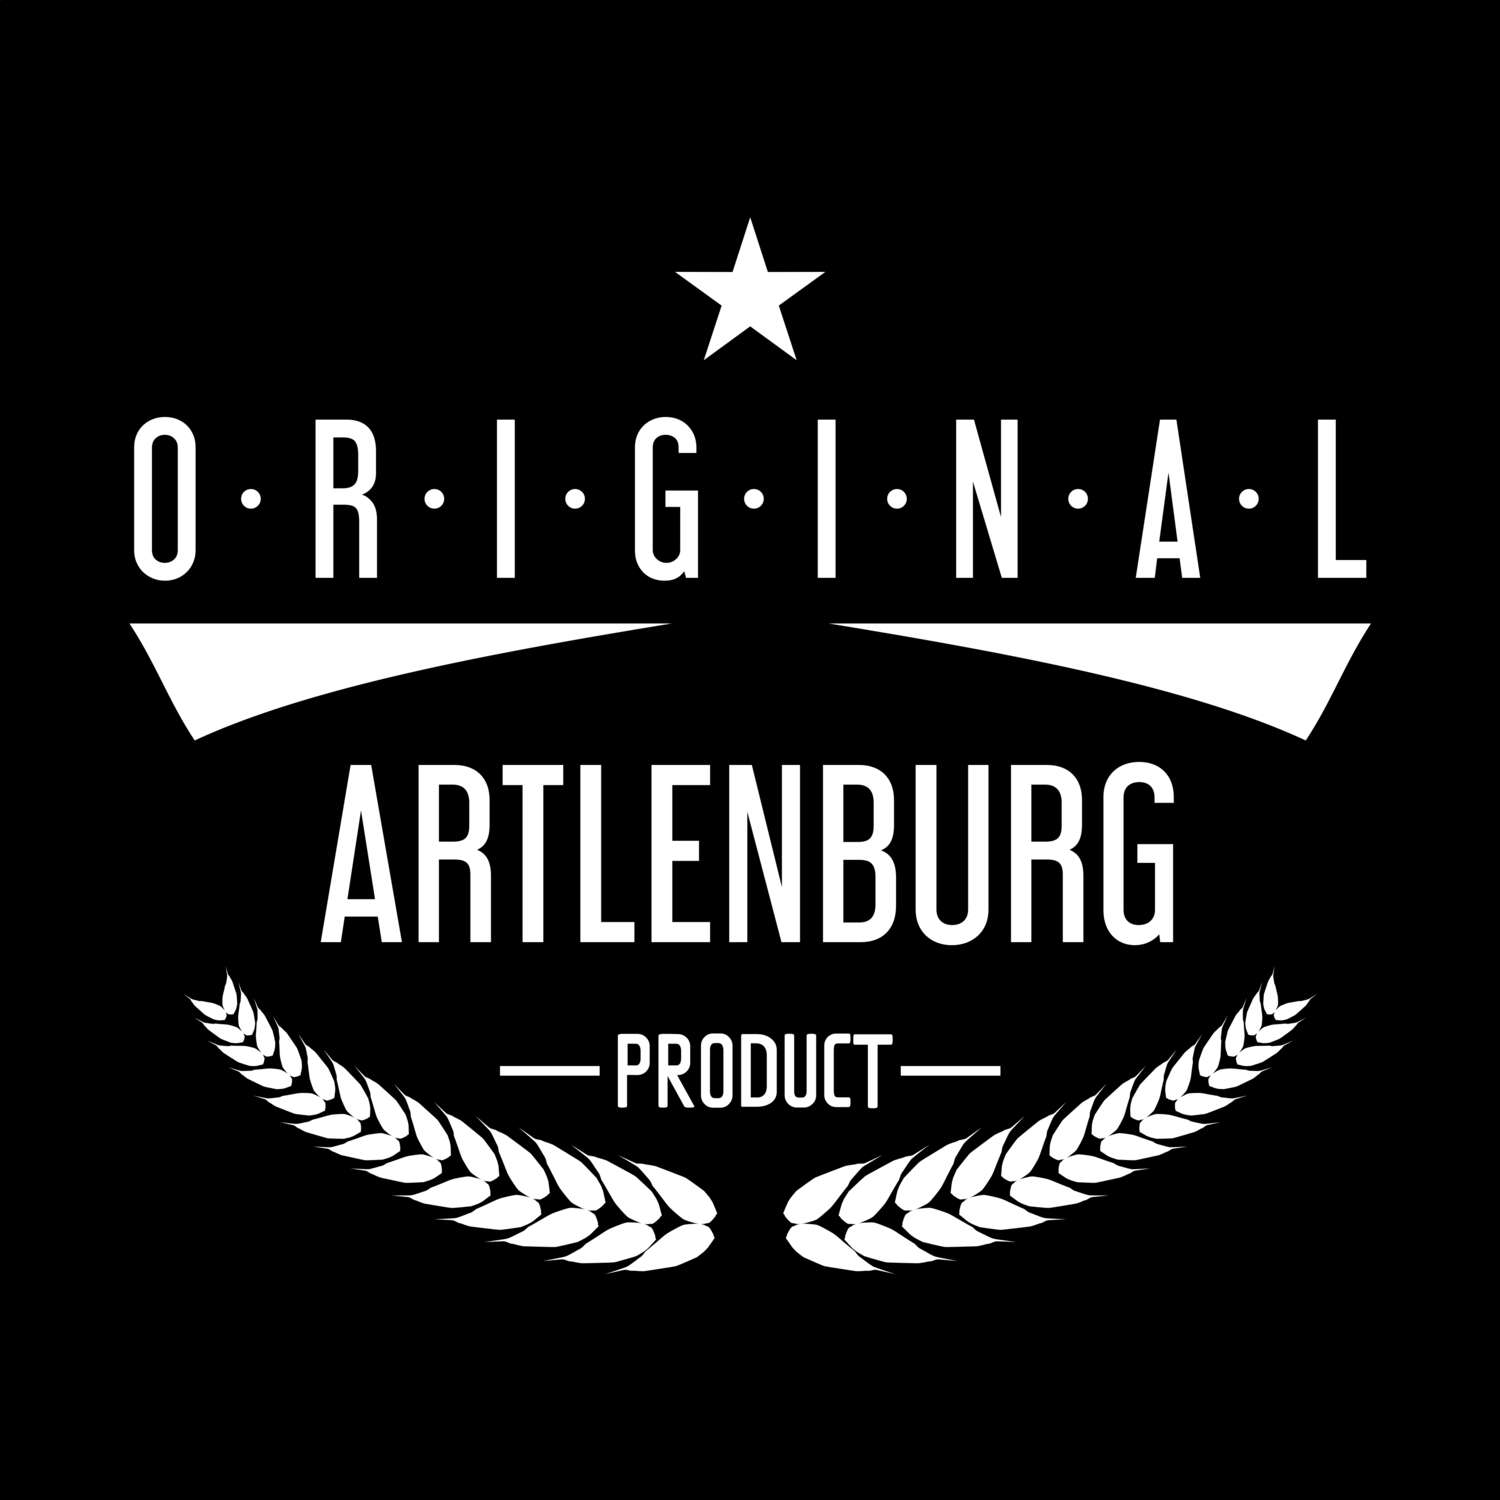 Artlenburg T-Shirt »Original Product«